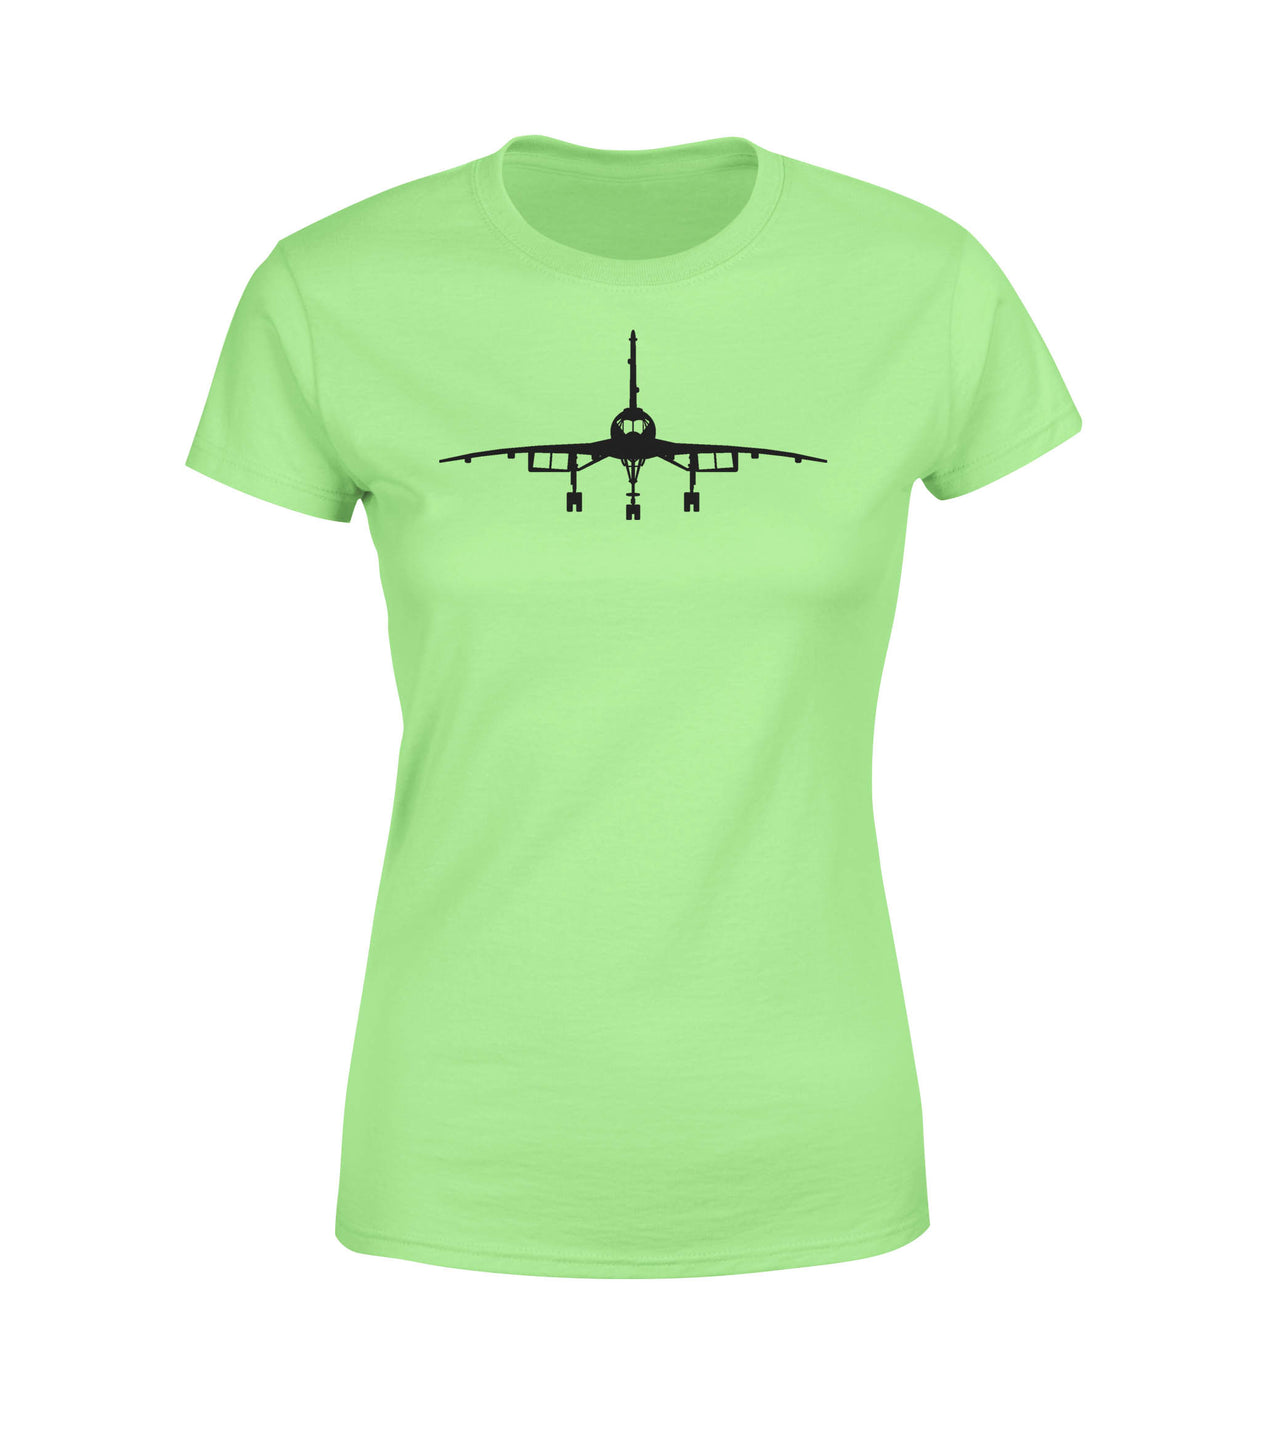 Concorde Silhouette Designed Women T-Shirts